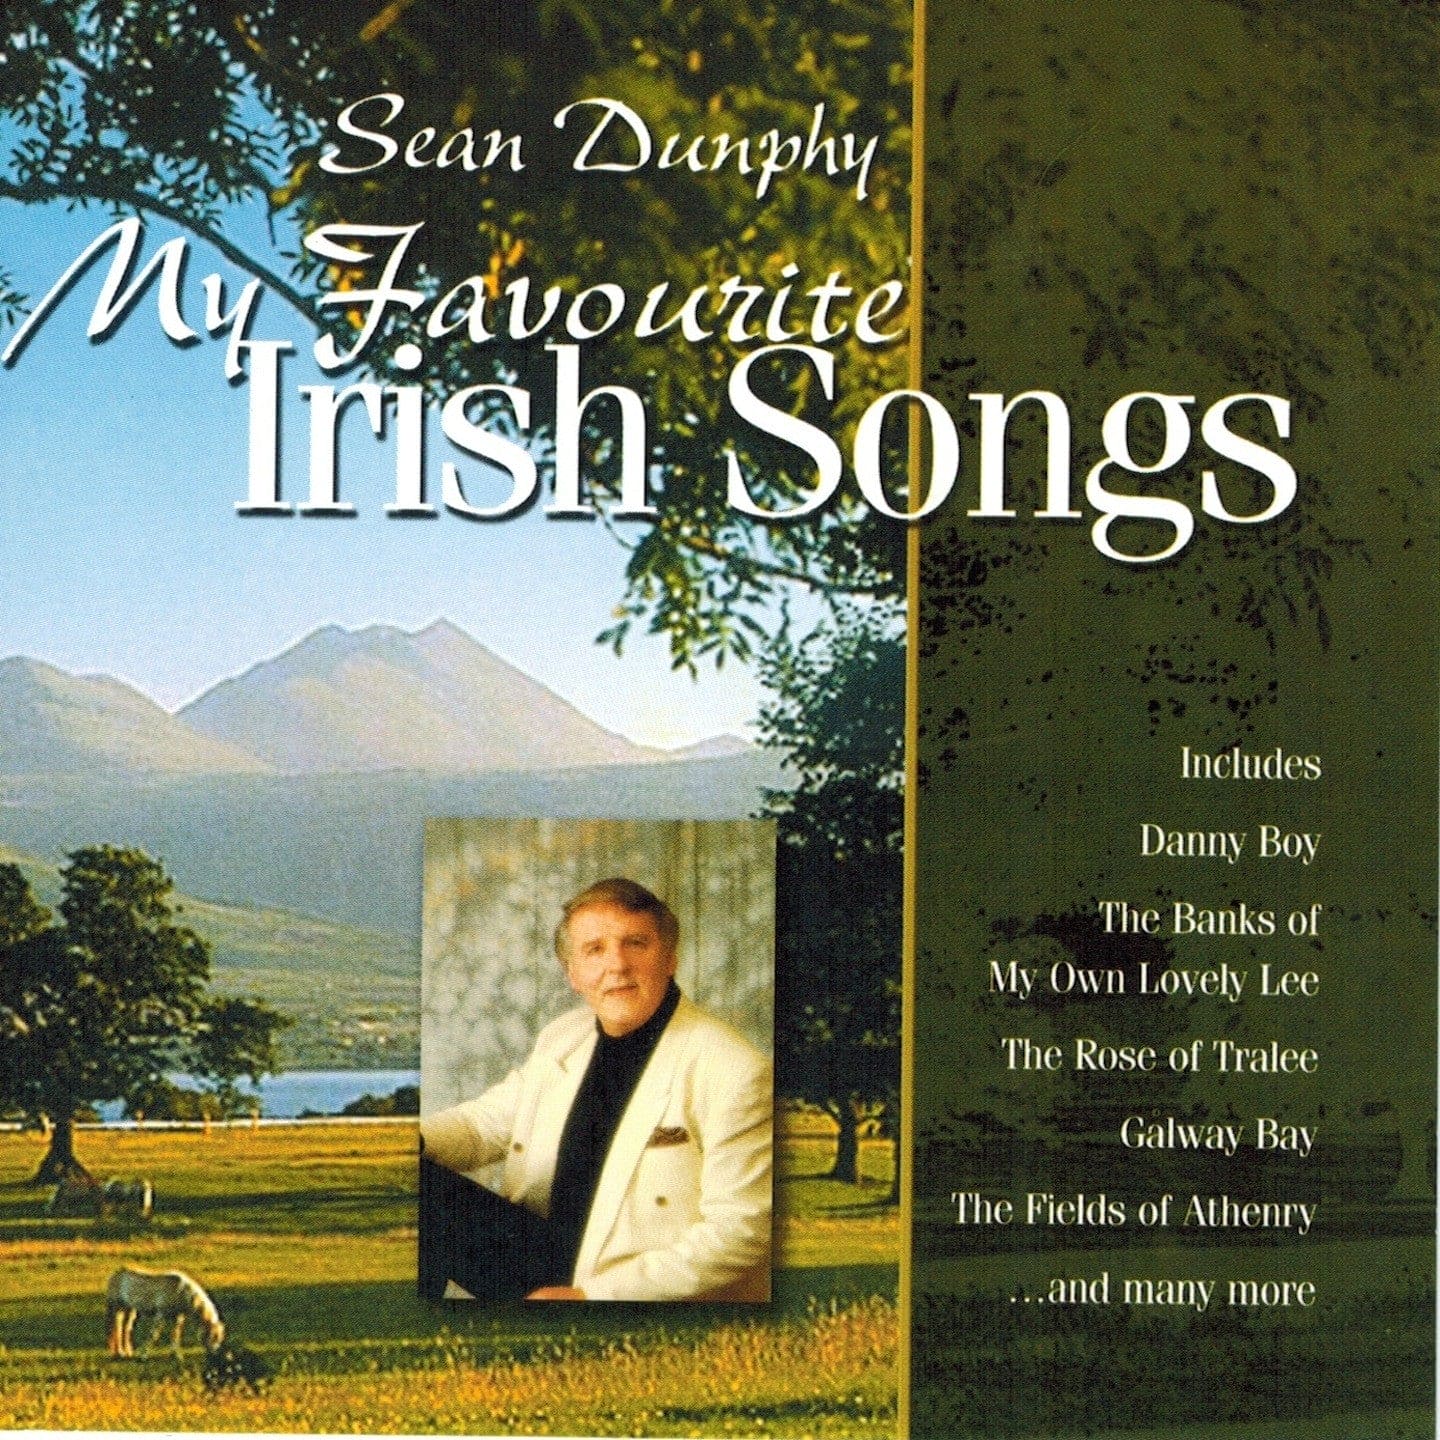 My Favourite Irish Songs - Sean Dunphy [CD]